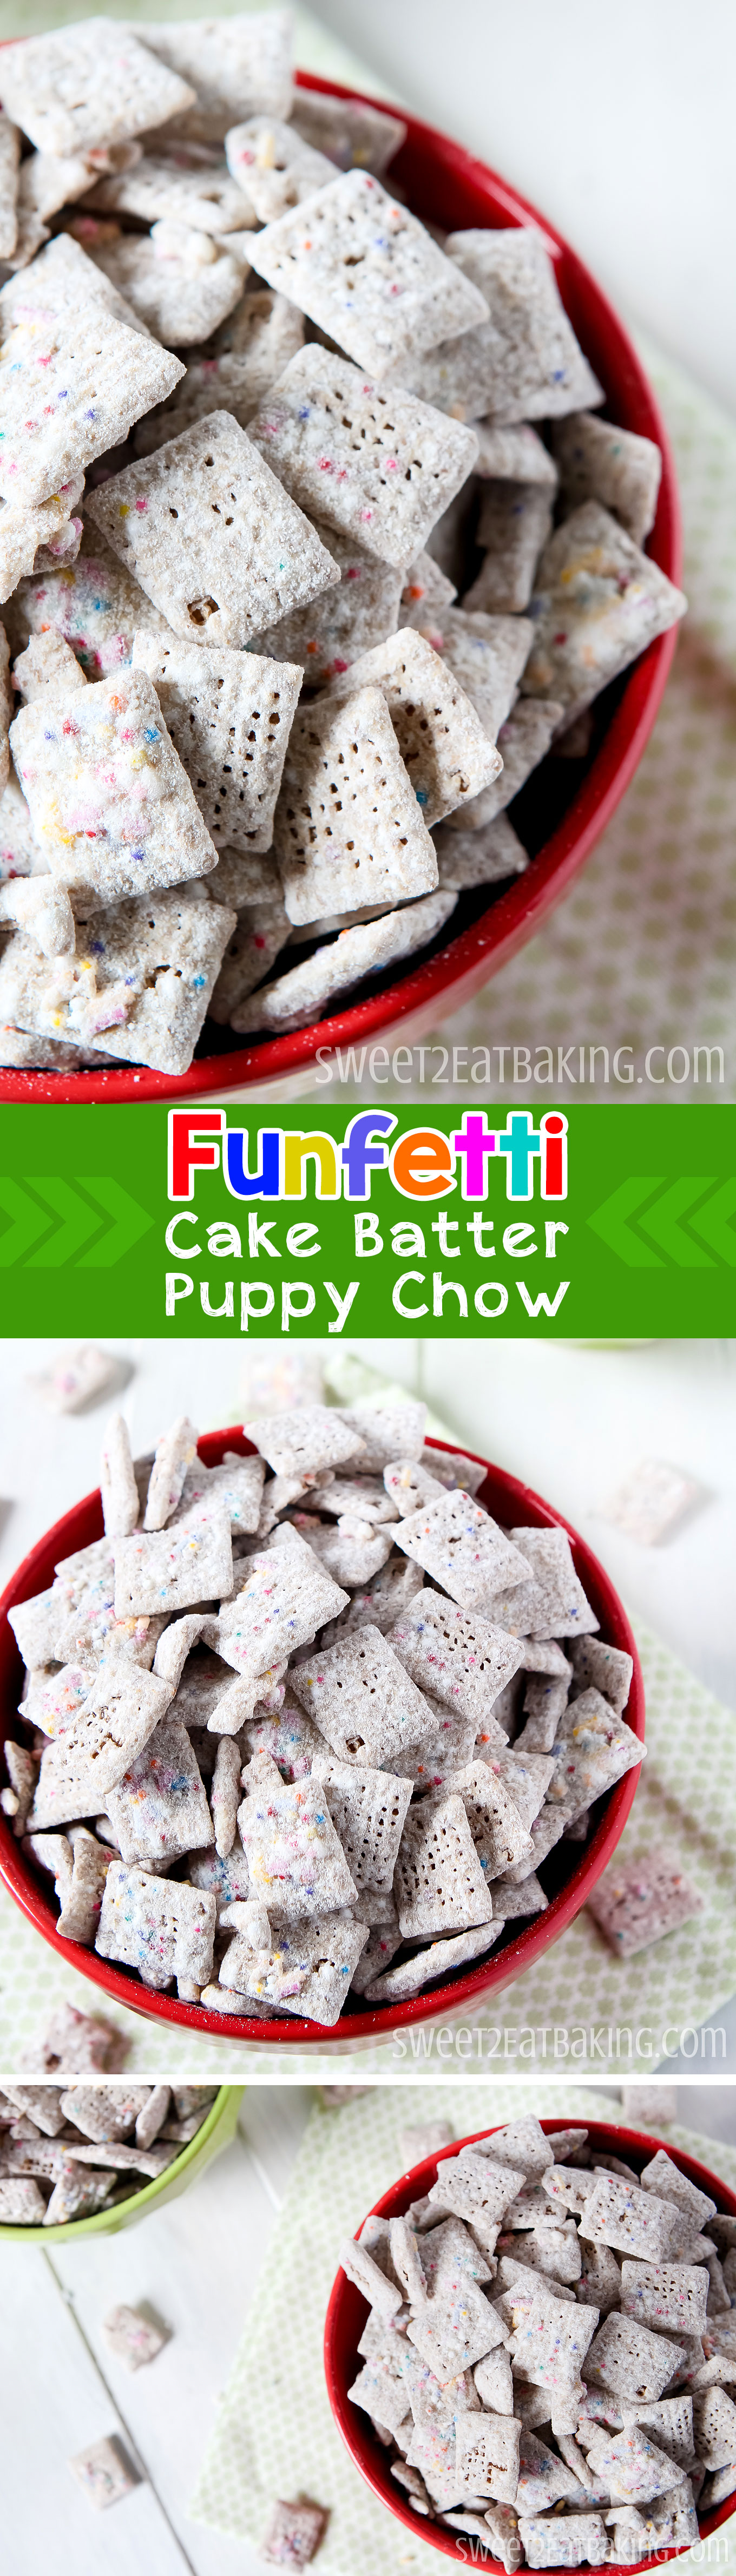 Funfetti Cake Batter Puppy Chow (Muddy Buddies) Chex Recipe by Sweet2EatBaking.com